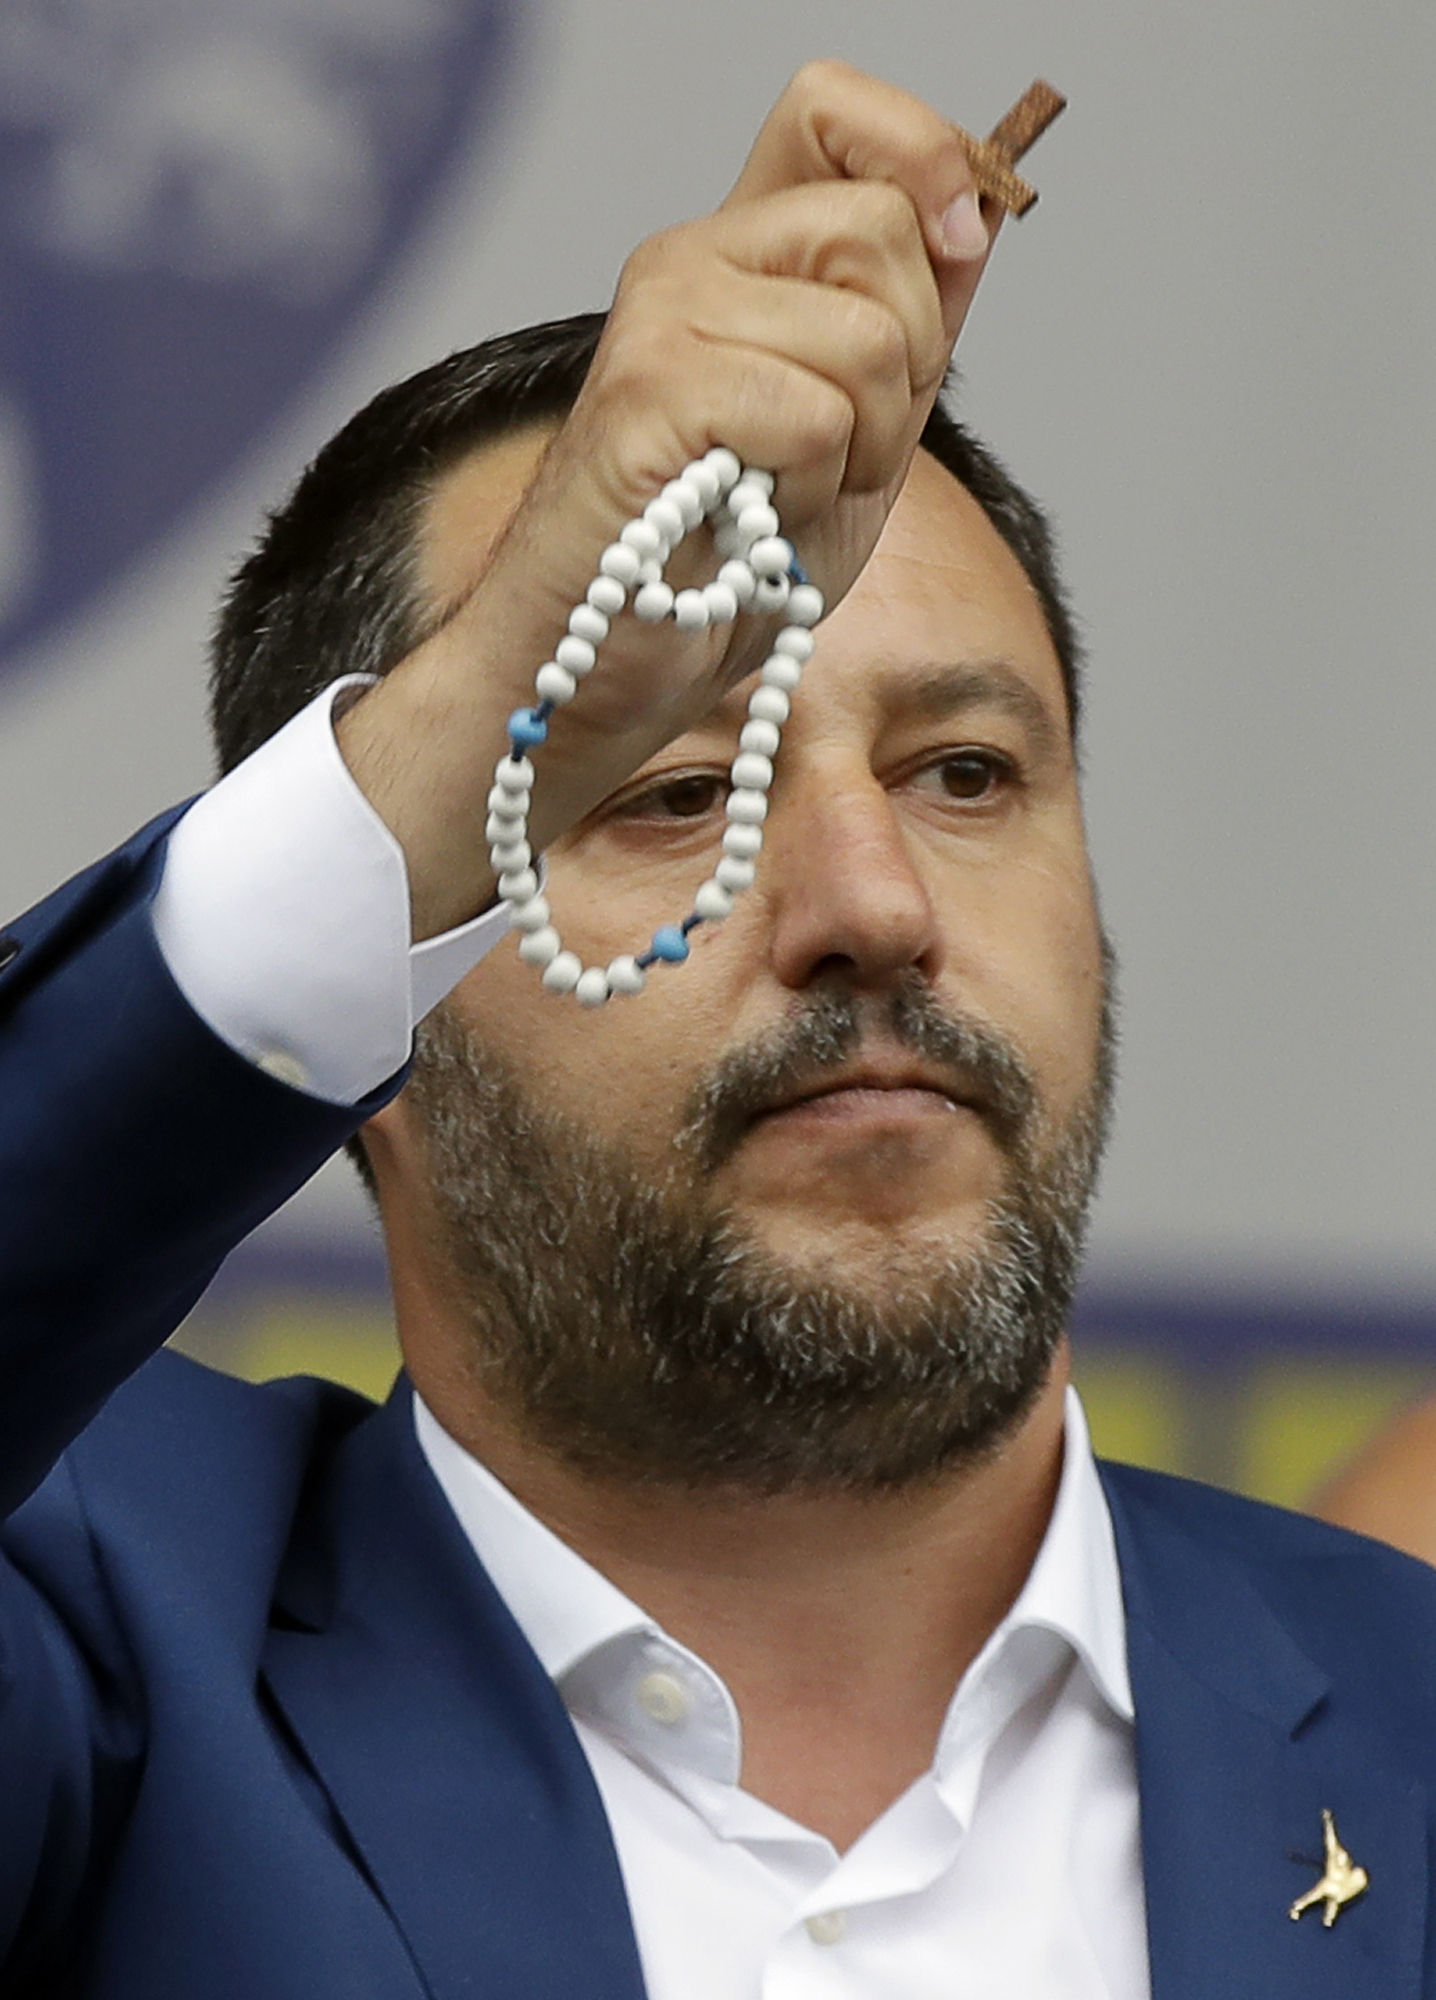 Salvini displaying a rosary.